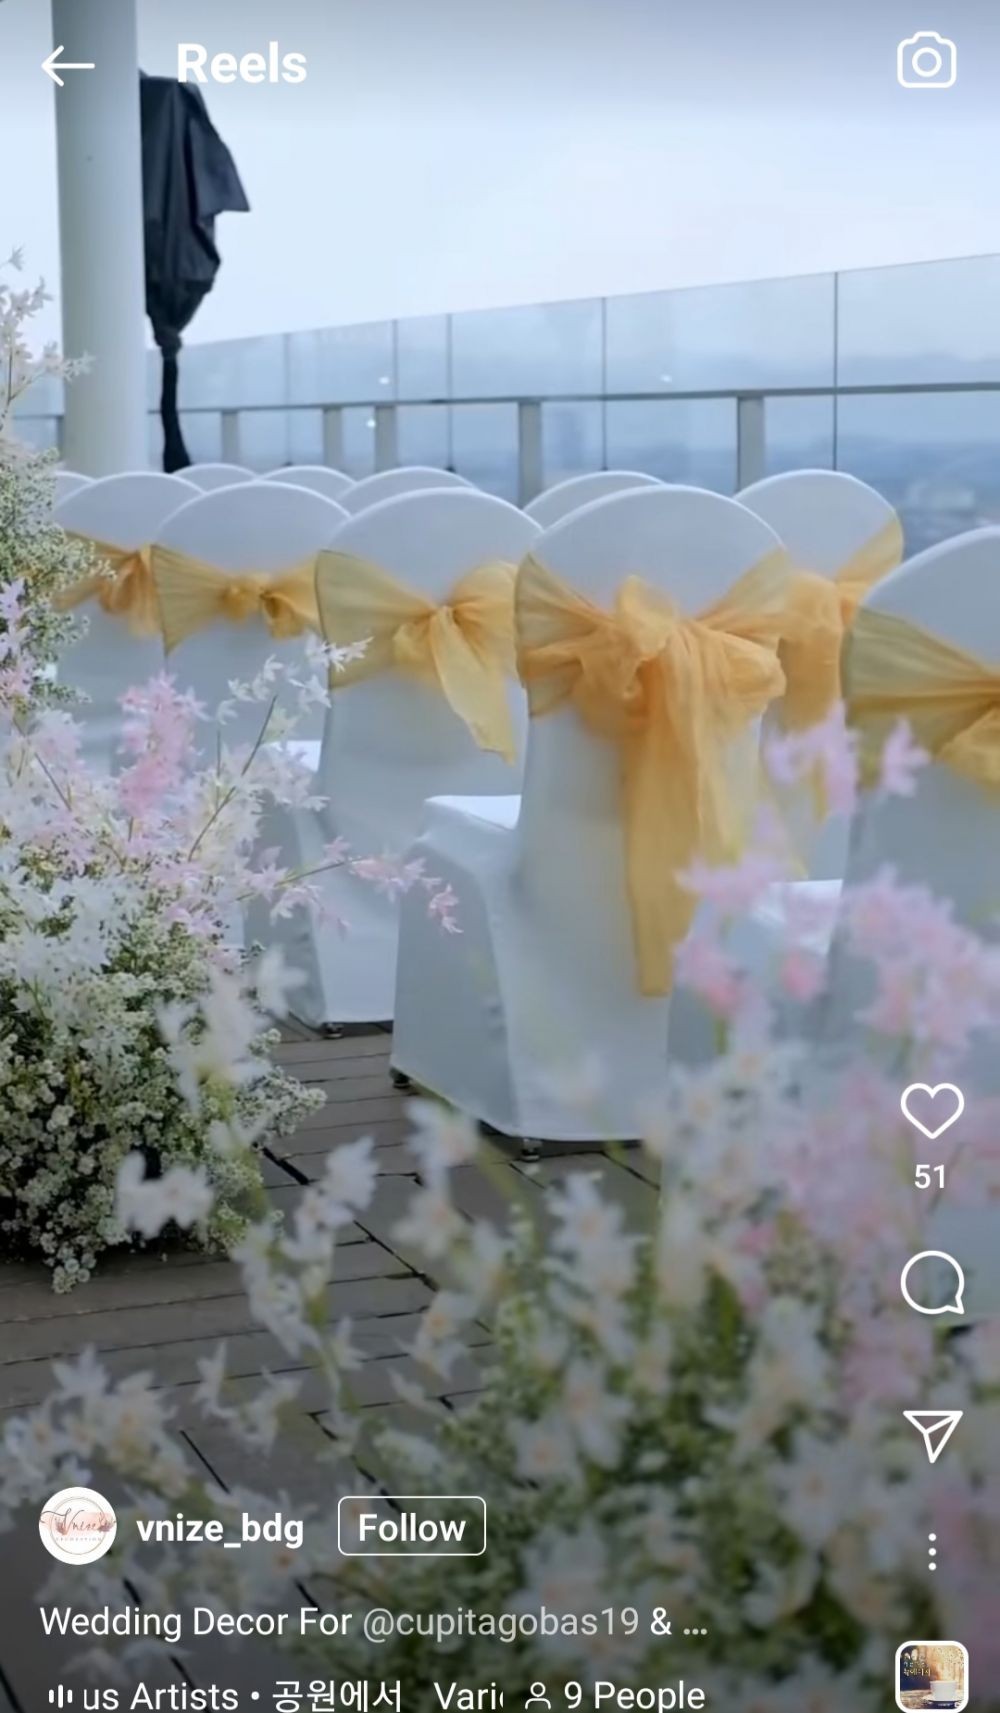 9 Dekorasi Akad Pernikahan Cupi Cupita, bak Taman Bunga Putih 